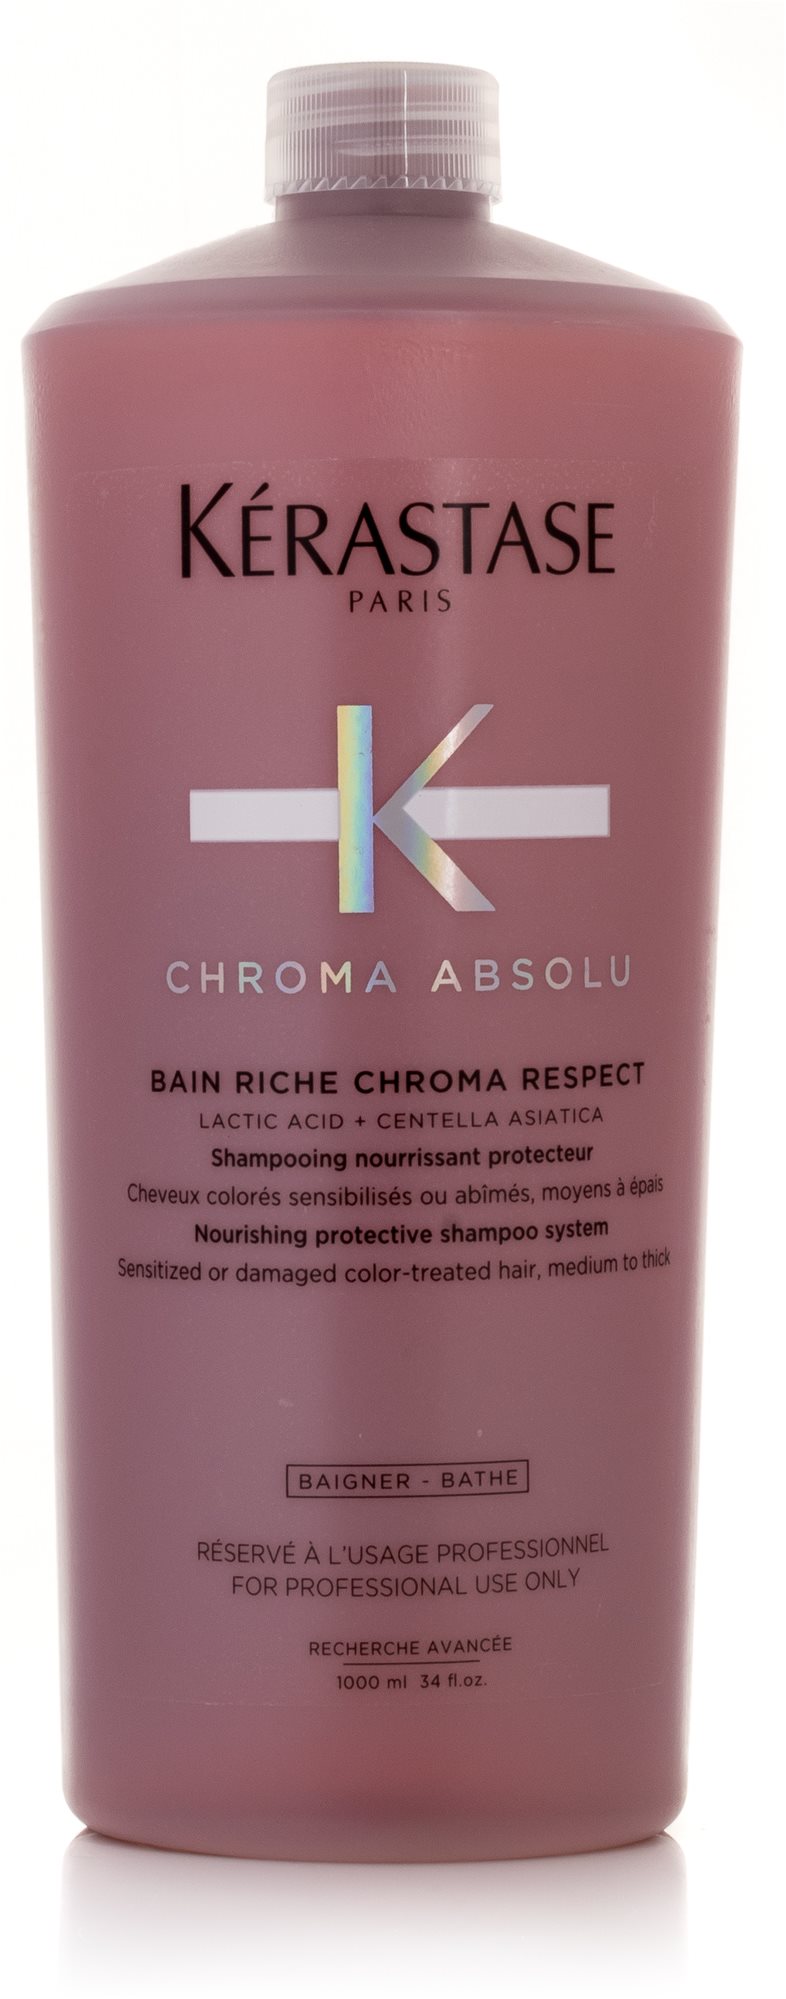 KÉRASTASE Chroma Absolu Bain Riche Chroma Respect Shampoo 1000 ml